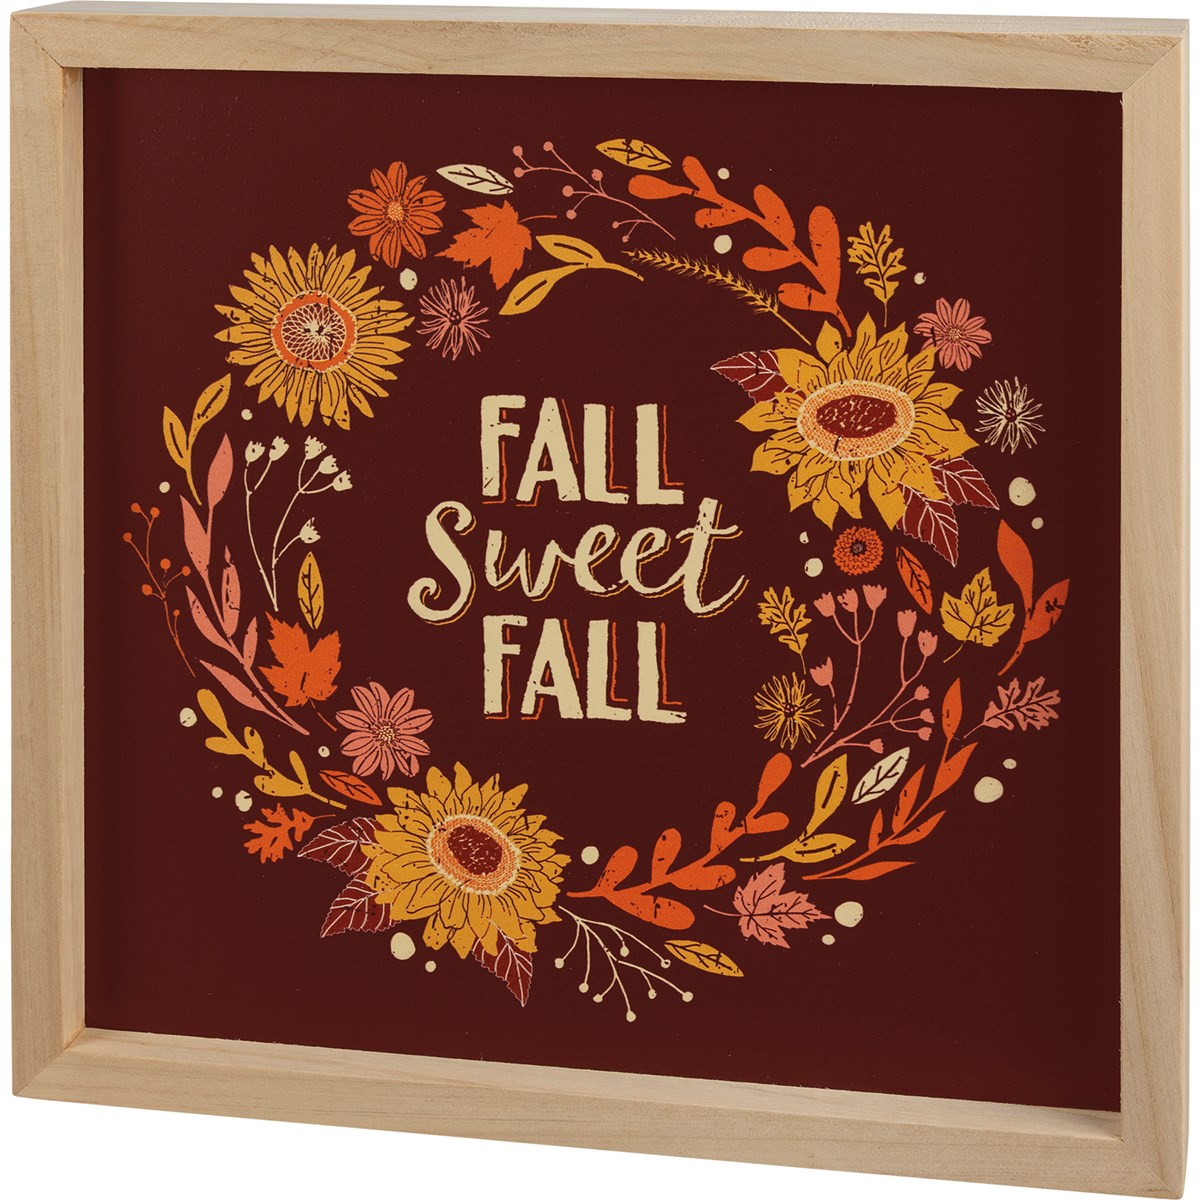 Inset Box Sign - Fall Sweet Fall - 12" x 12" x 1.75" - Wood